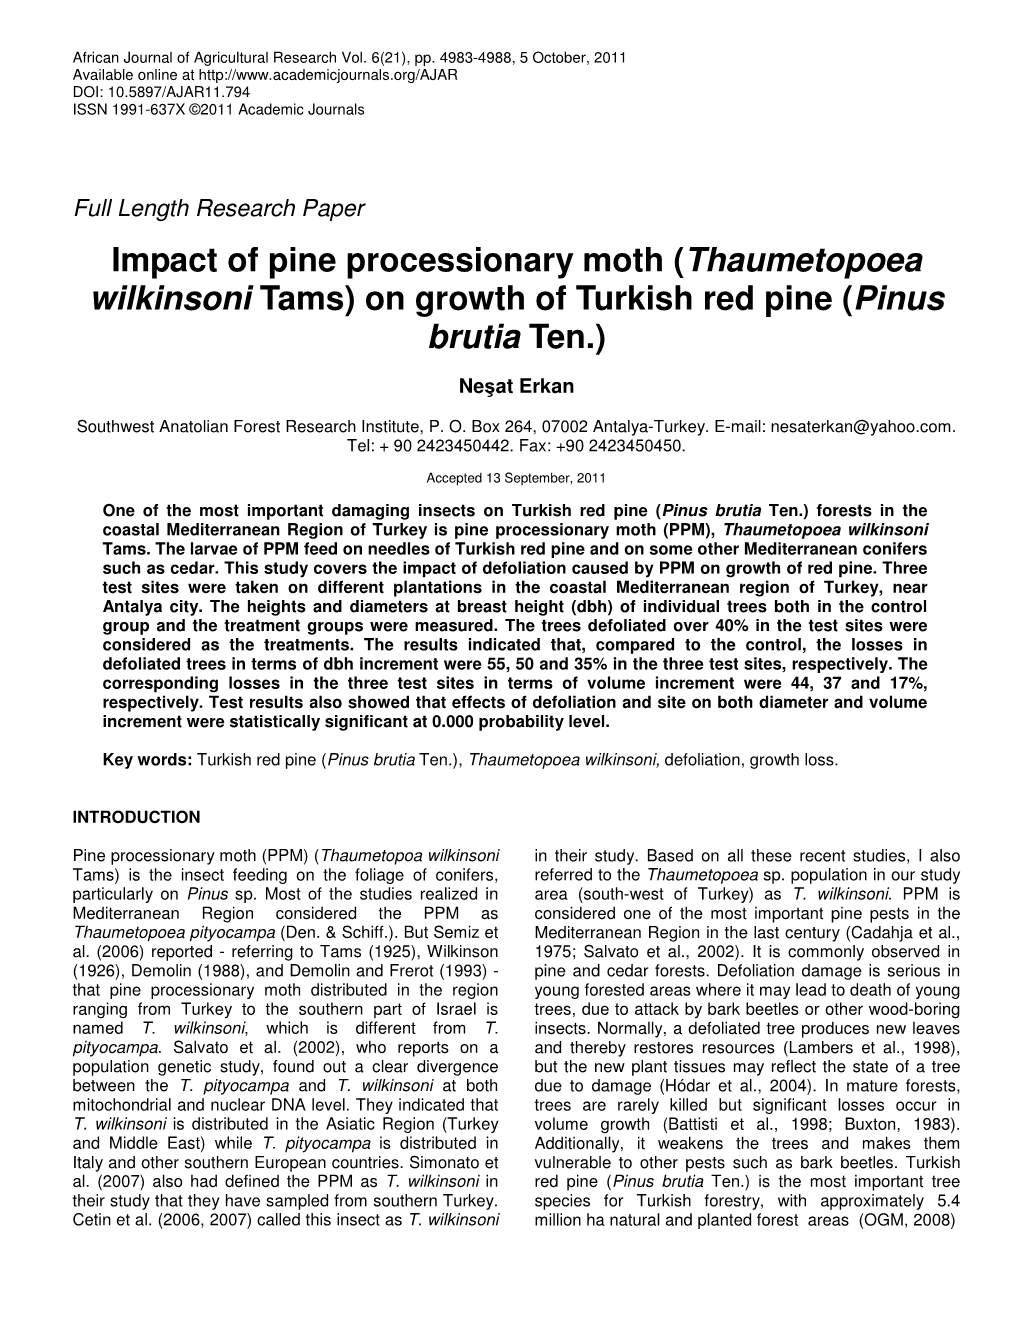 Impact of Pine Processionary Moth (Thaumetopoea Wilkinsoni Tams) on Growth of Turkish Red Pine (Pinus Brutia Ten.)